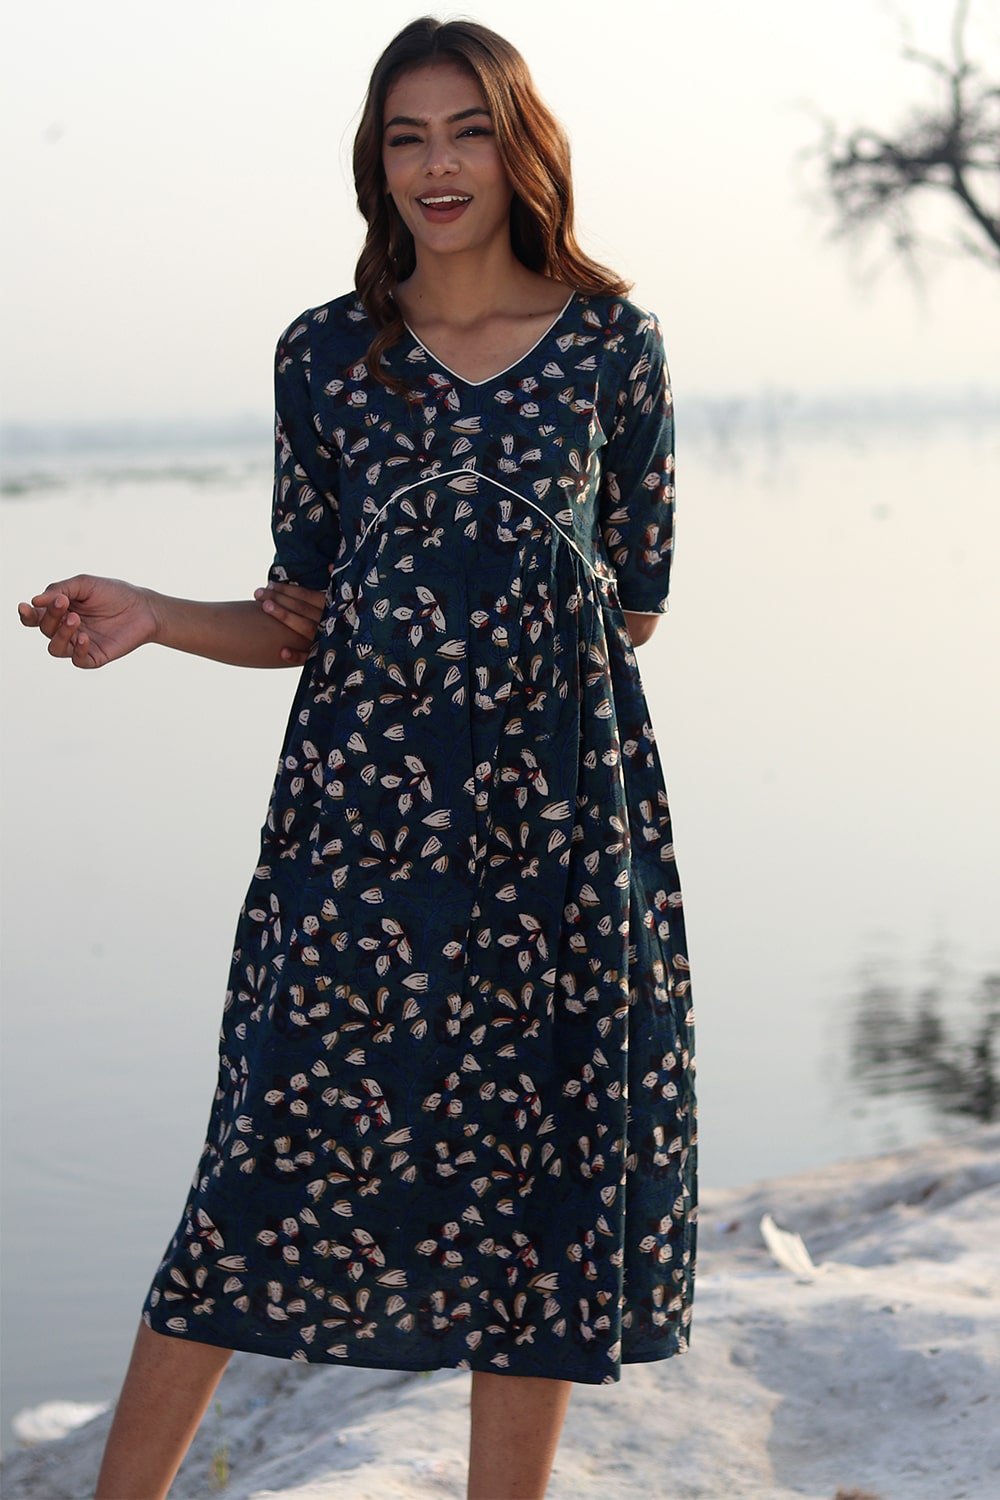 SootiSyahi 'Indigo Era' Block Printed Cotton Dress - SootiSyahi